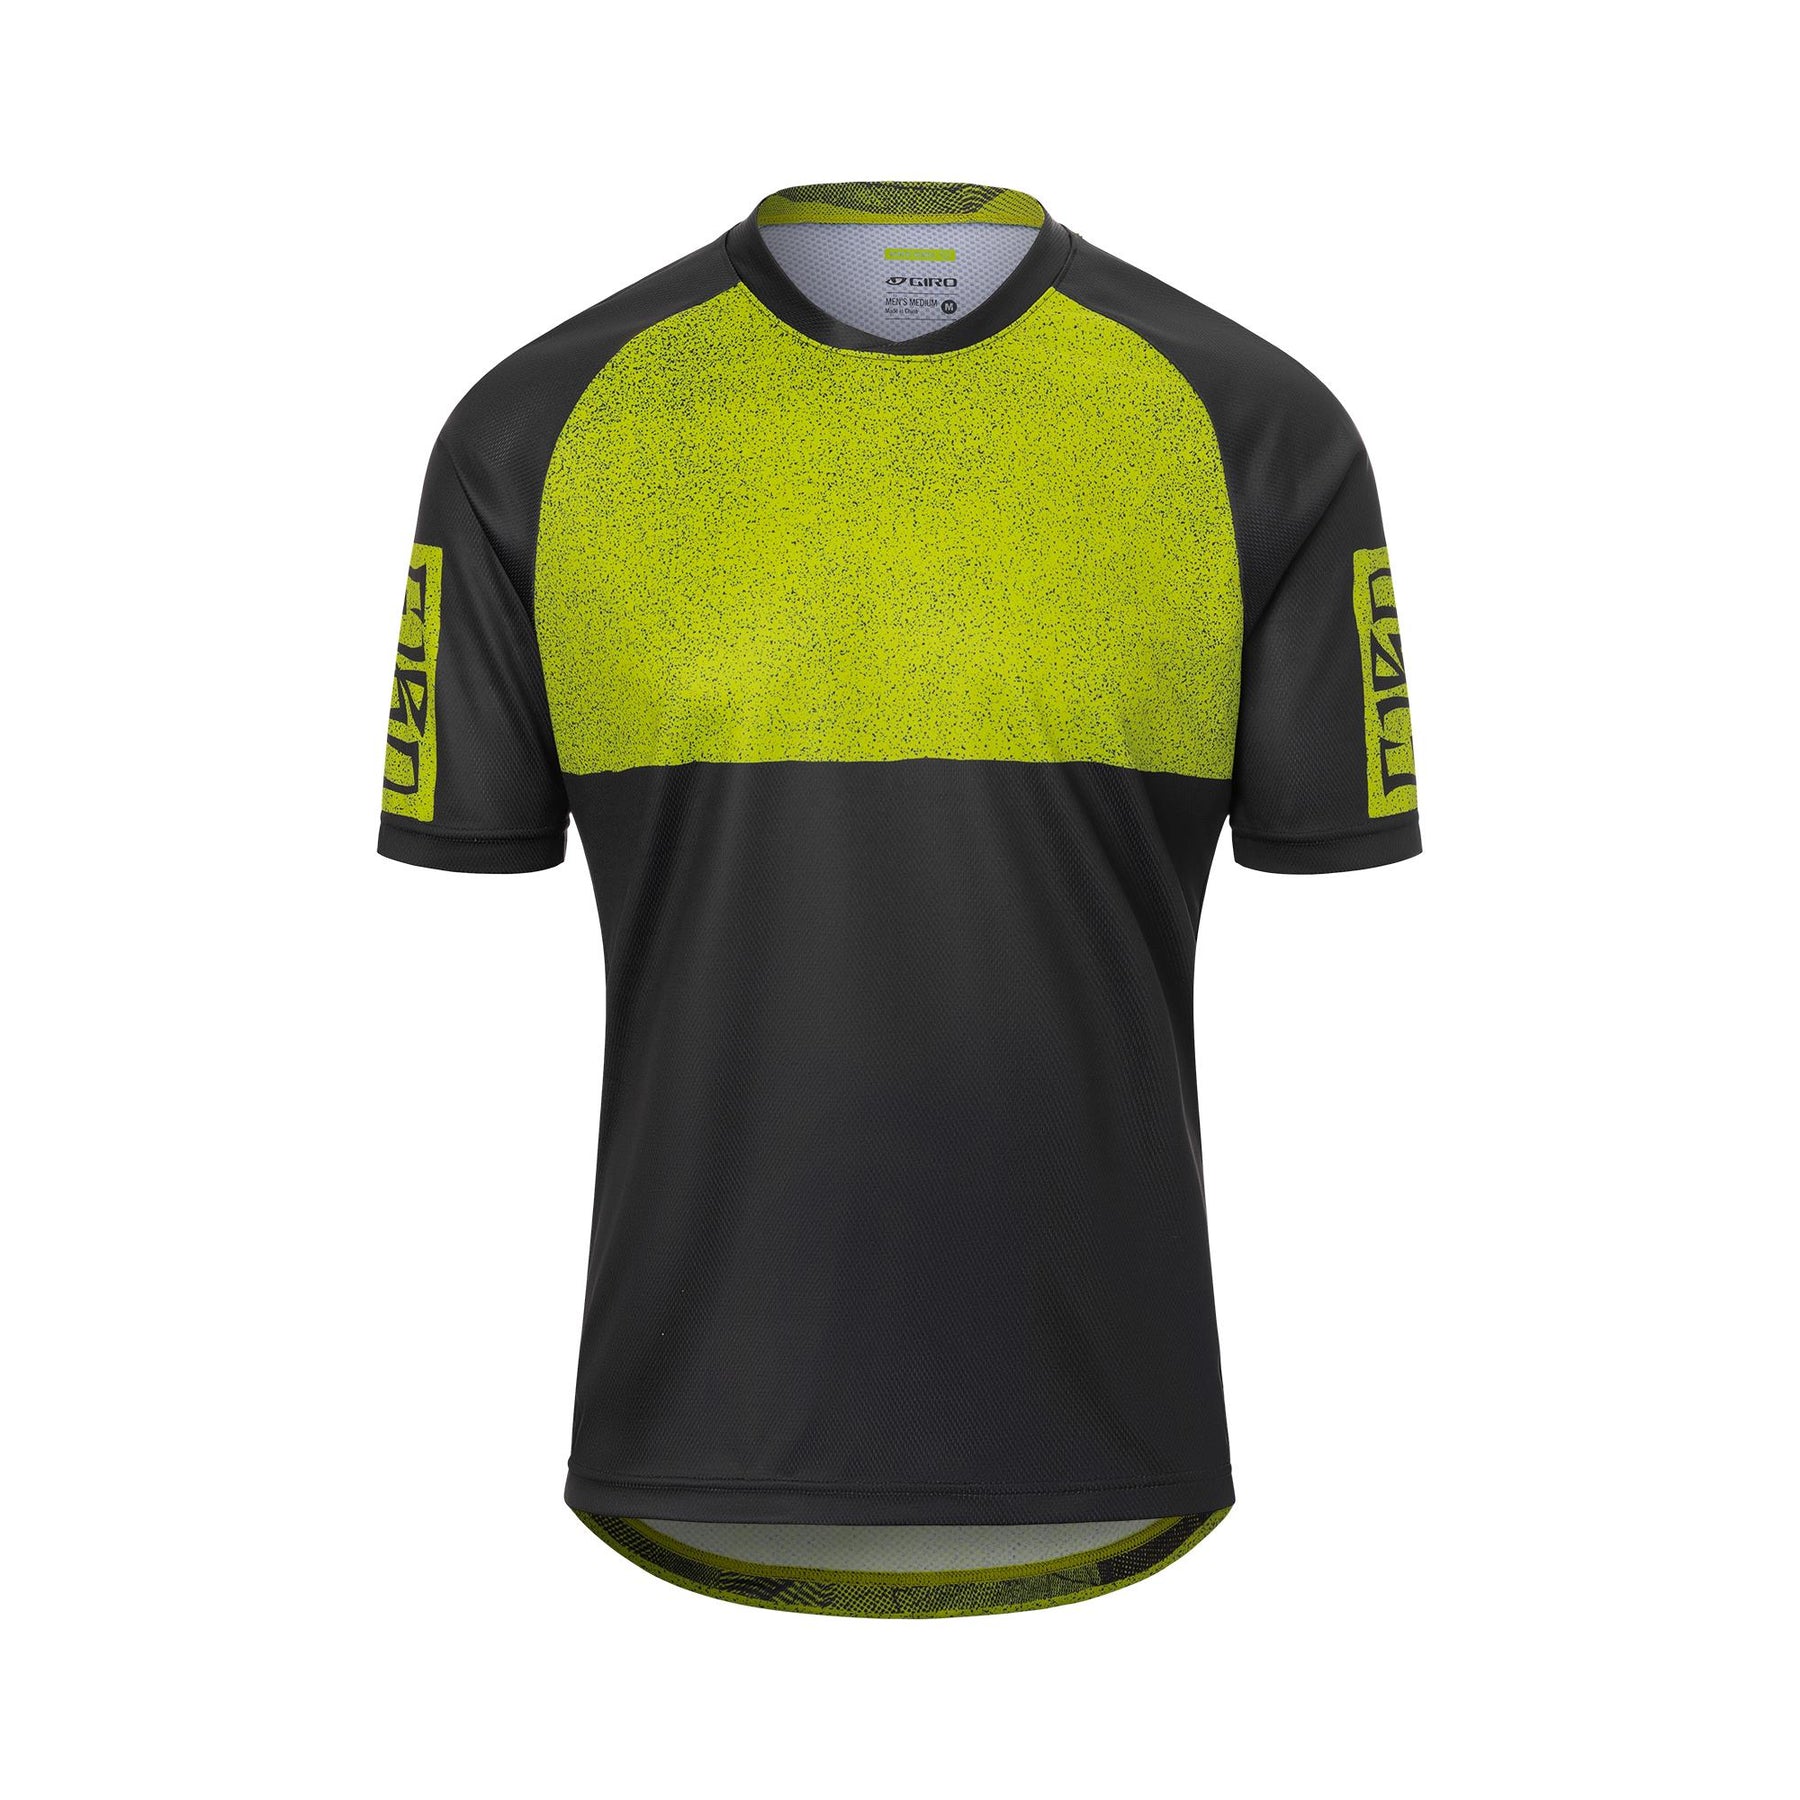 Giro Roust Short Sleeve MTB Jersey